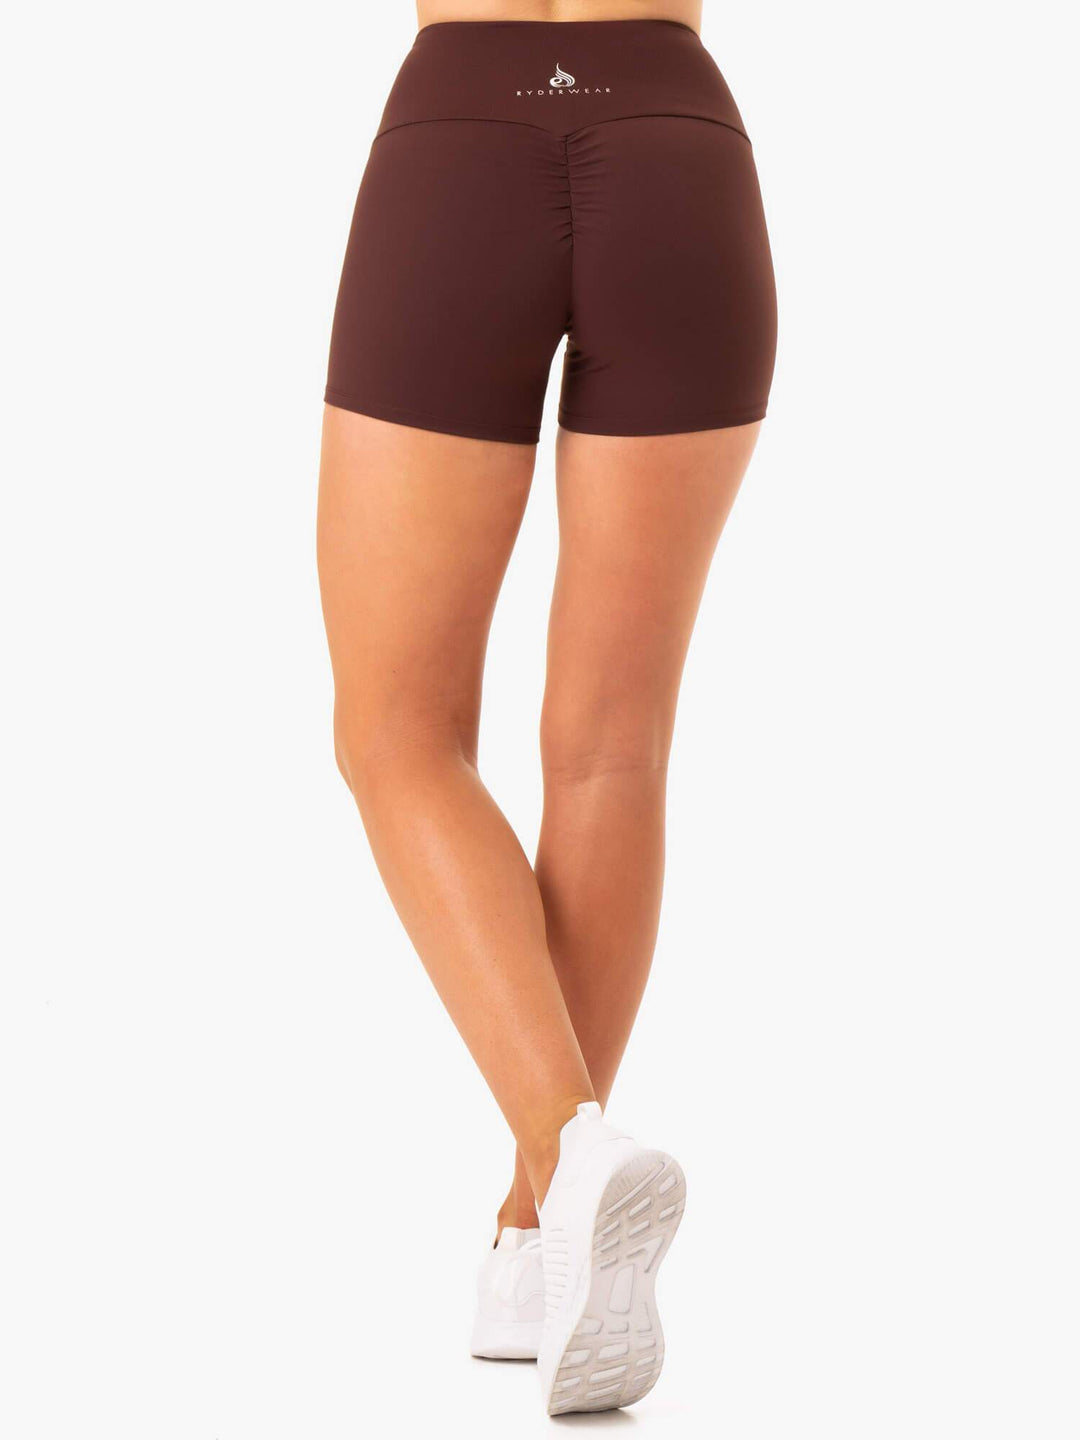 Staples Scrunch Bum Booty Shorts - Chocolate Clothing Ryderwear 